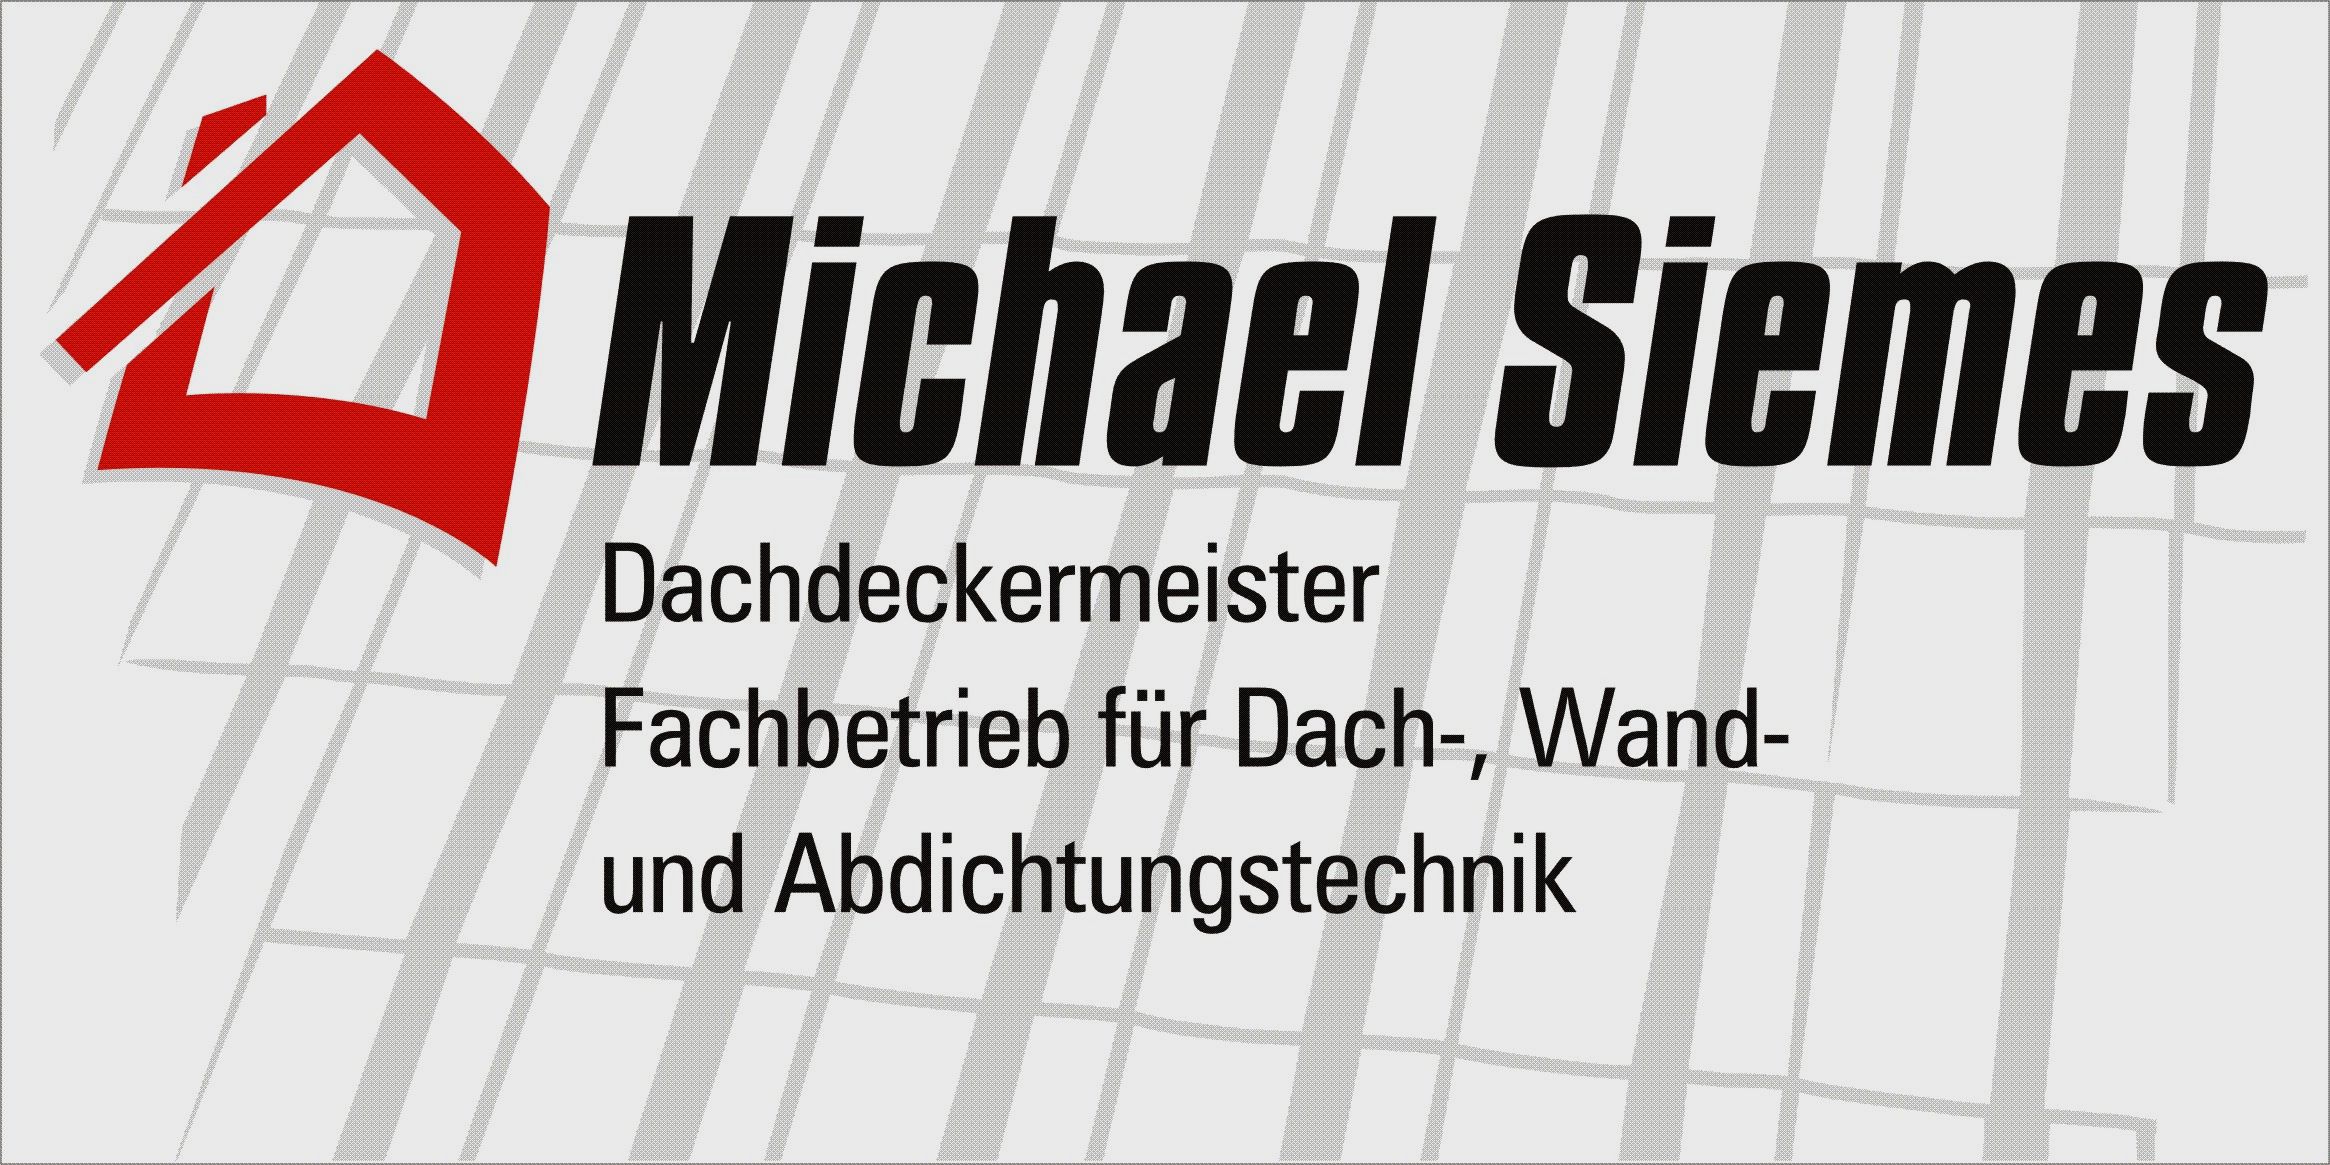 Michael Siemes Dachdeckermeister